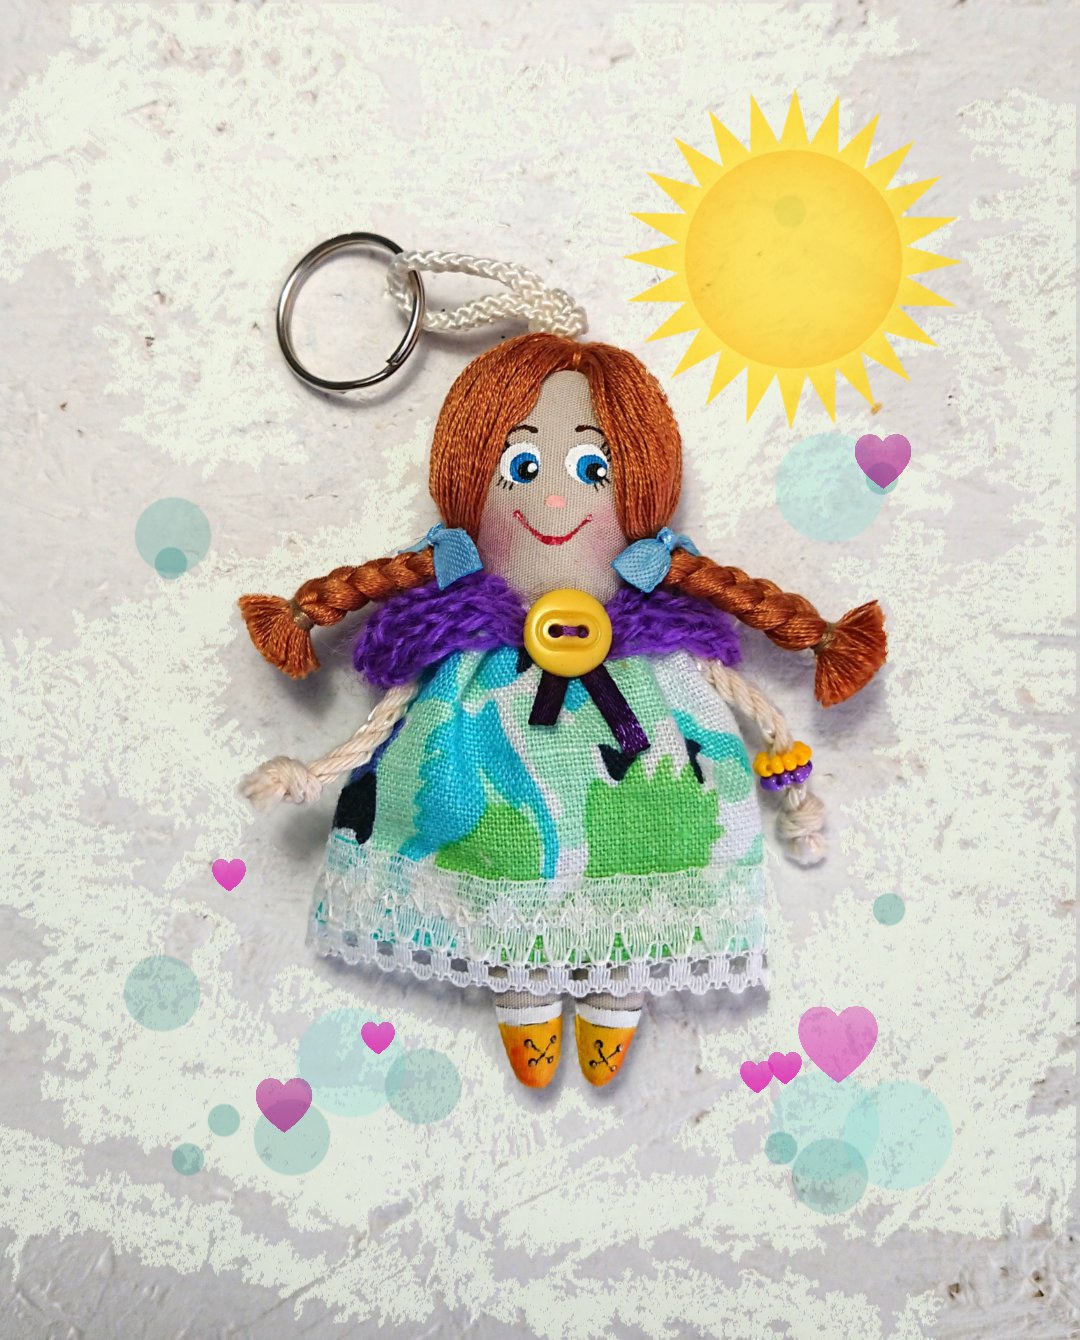 Handmadecrafted doll keychain. Small rag doll. Doll accessory. Gifts for girls